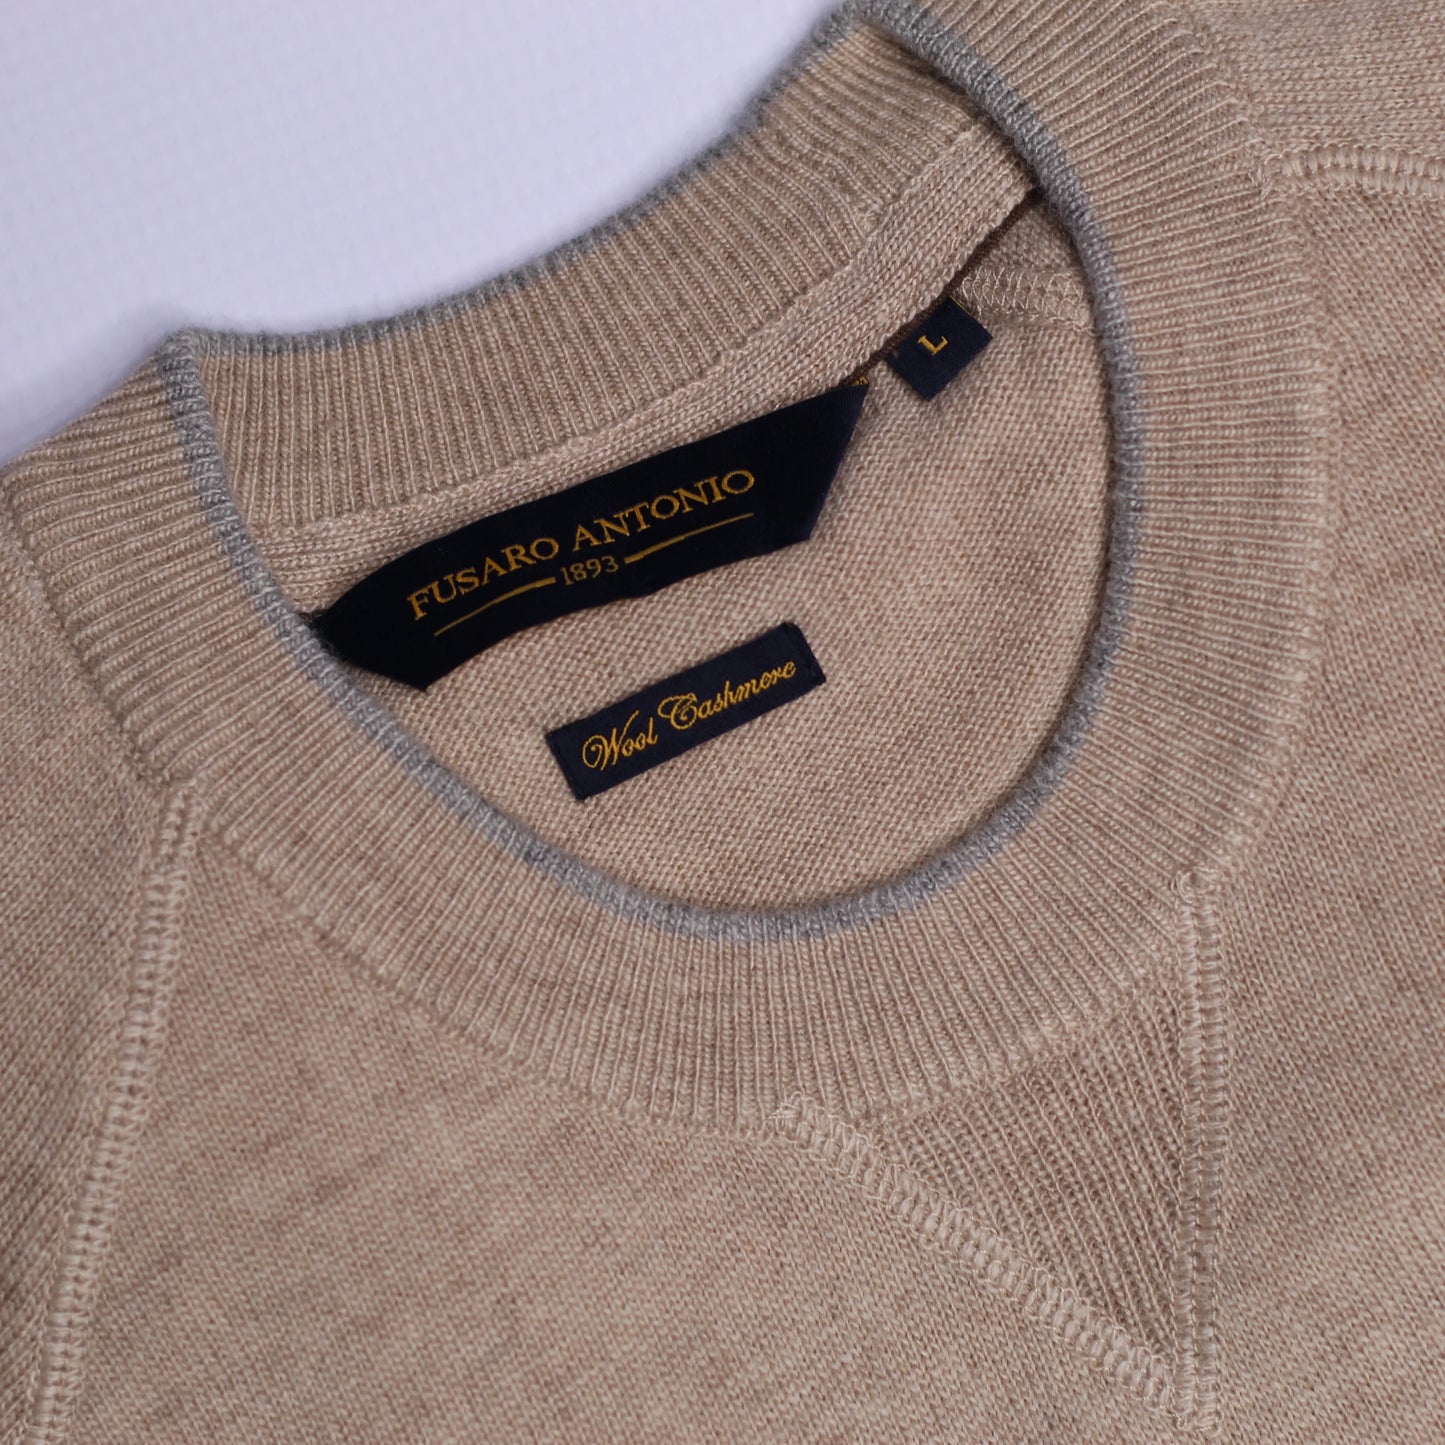 Fusaro Antonio men's wool, cashmere crewneck jersey in sand (MA23076)